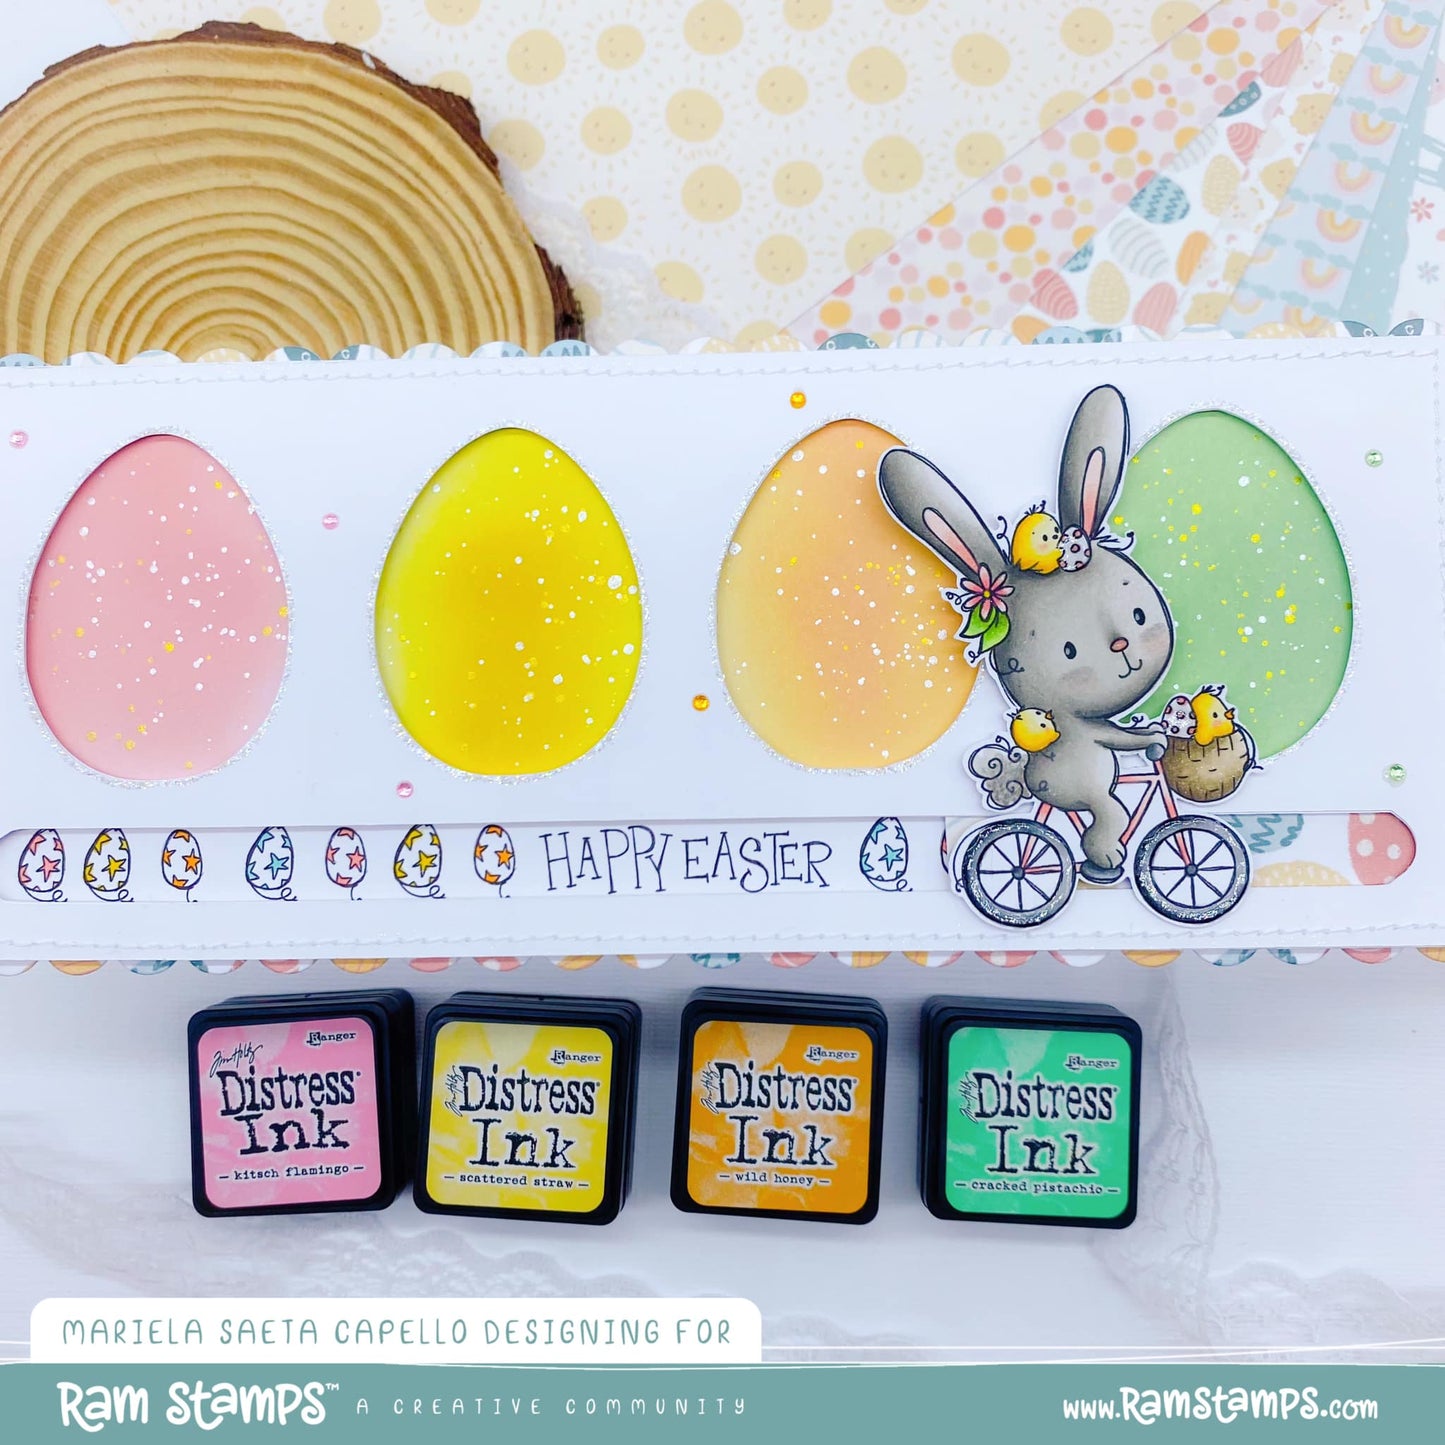 'Easter Fun' Digital Stamp Set